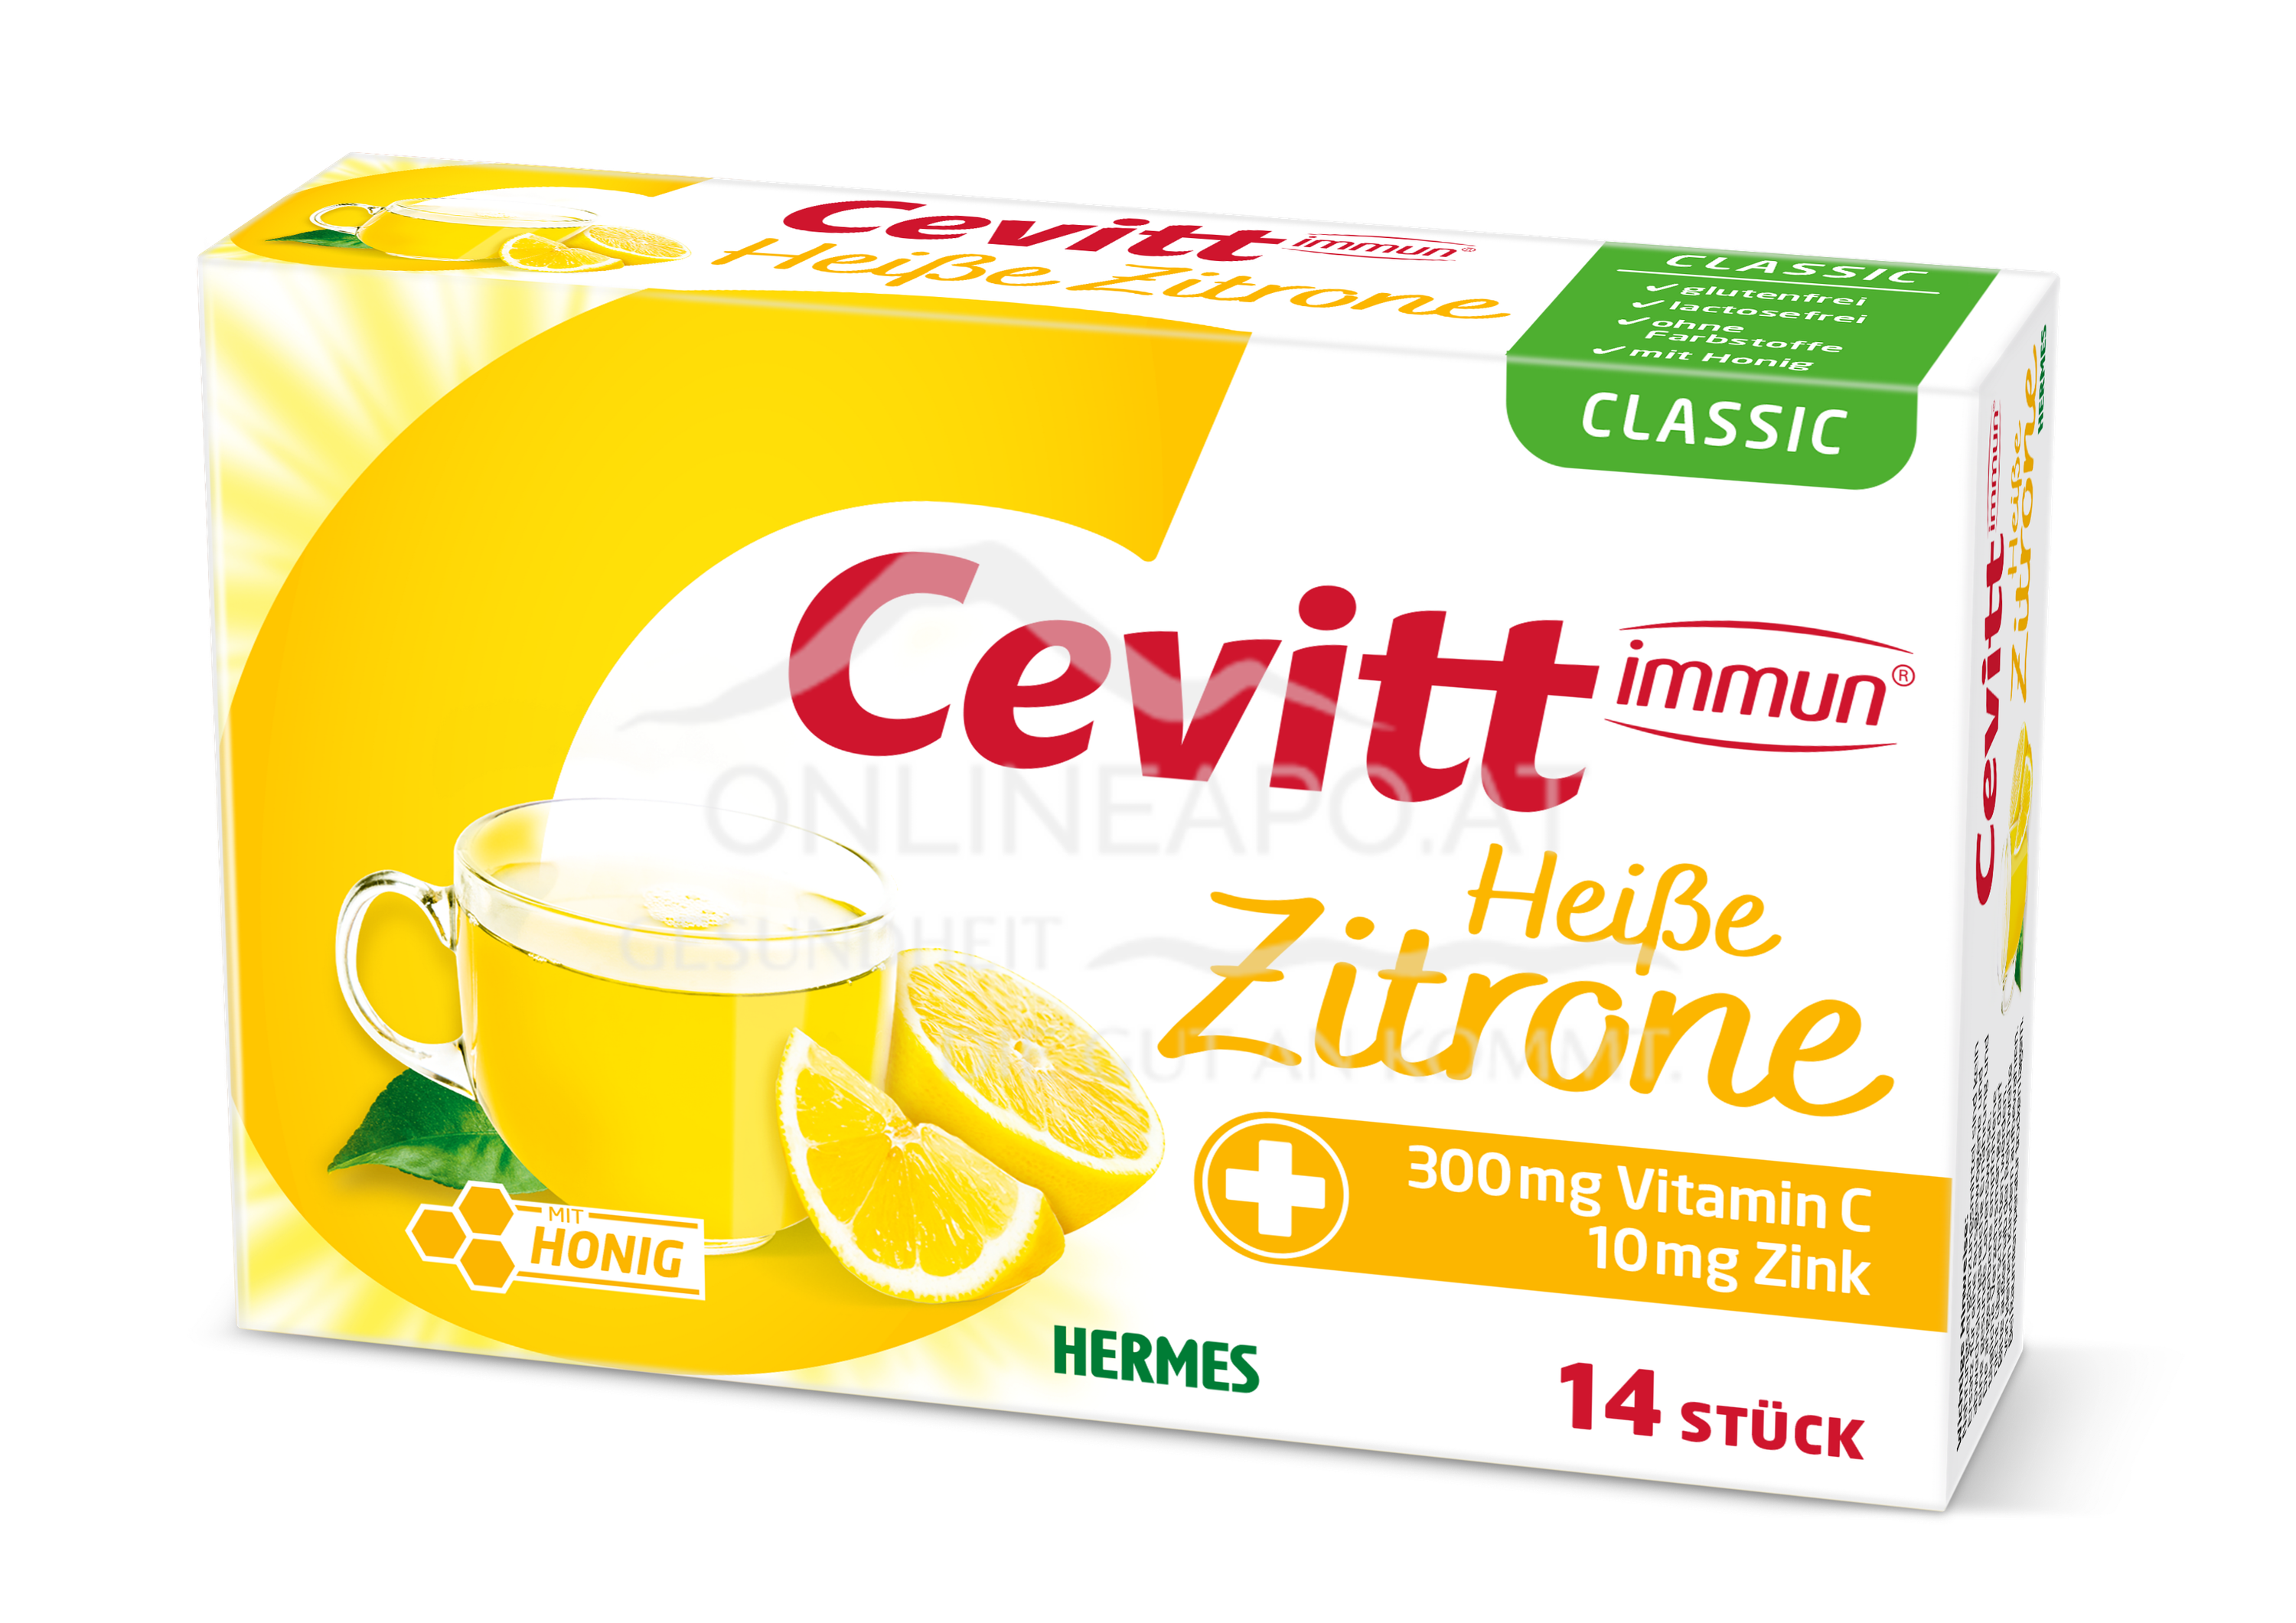 Cevitt immun® Heiße Zitrone Classic